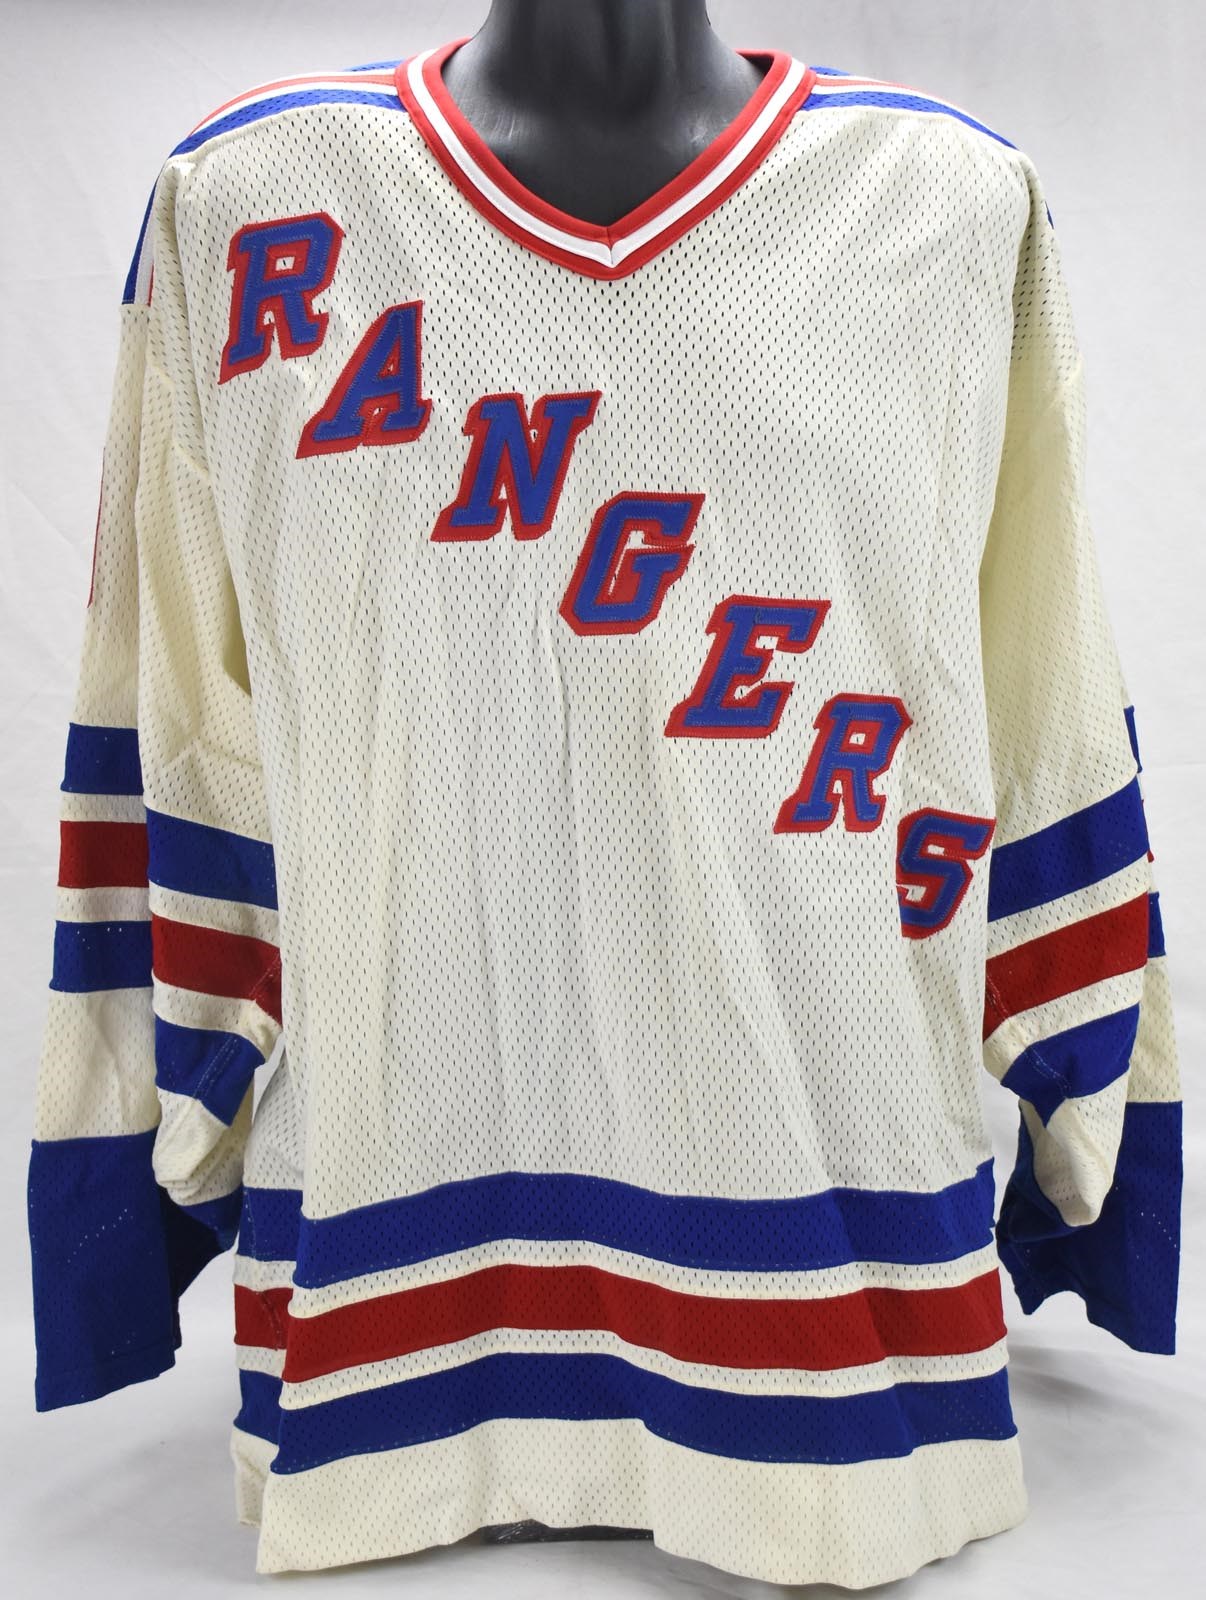 - Circa 1990-91 Bernie Nicholls Game Issued #9 Rangers Jersey - Retired Number